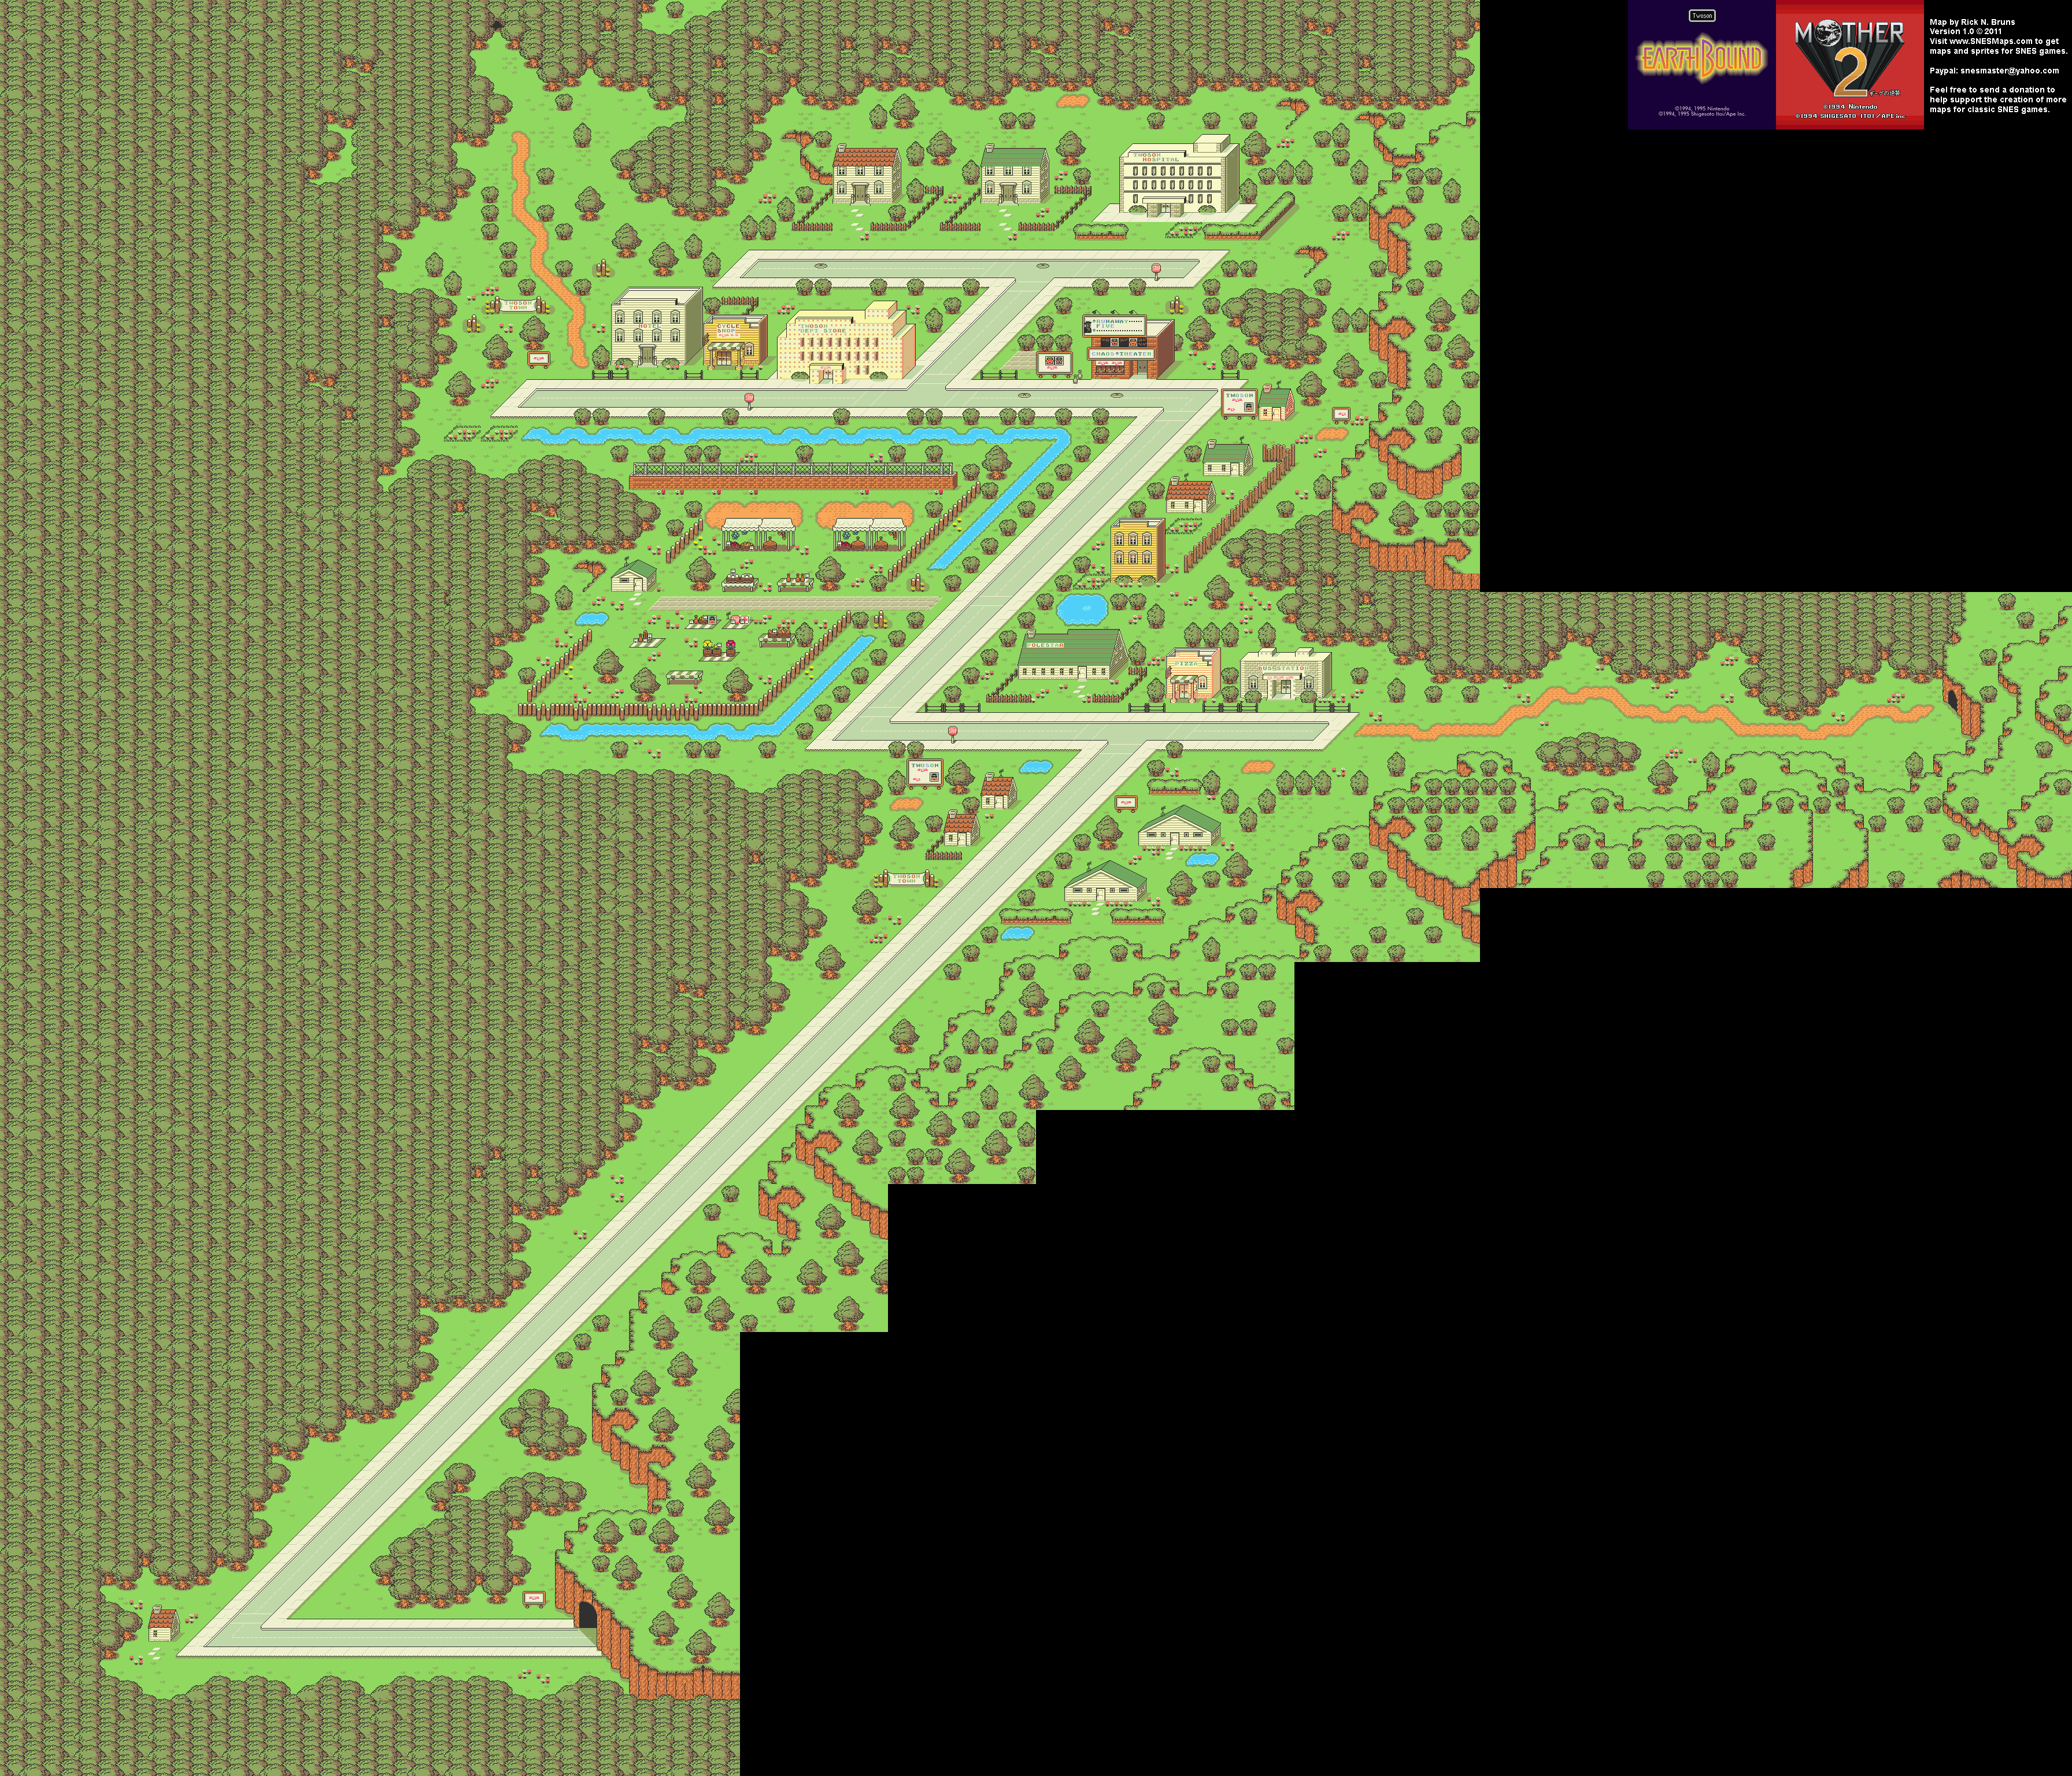 EarthBound (Mother 2) - Twoson Super Nintendo SNES Map BG